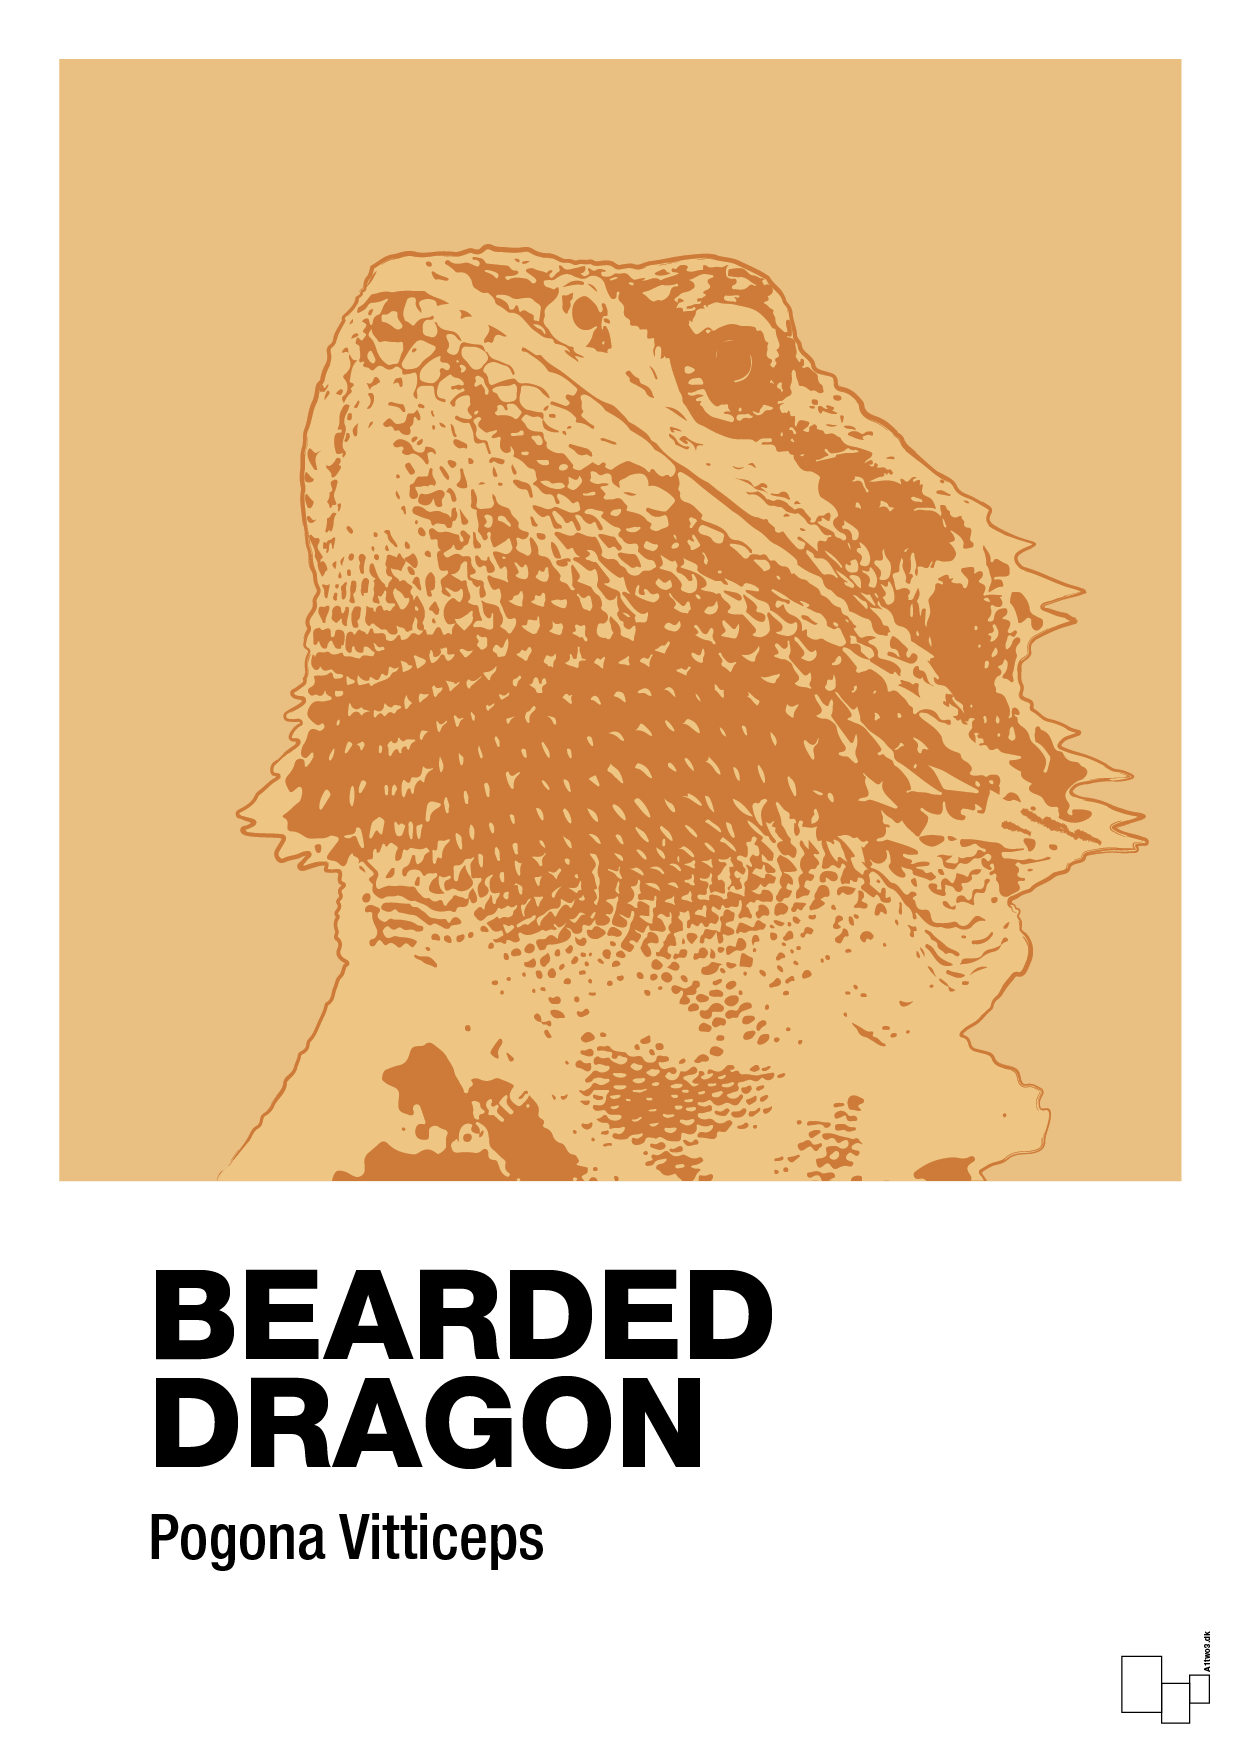 bearded dragon - Plakat med Videnskab i Charismatic